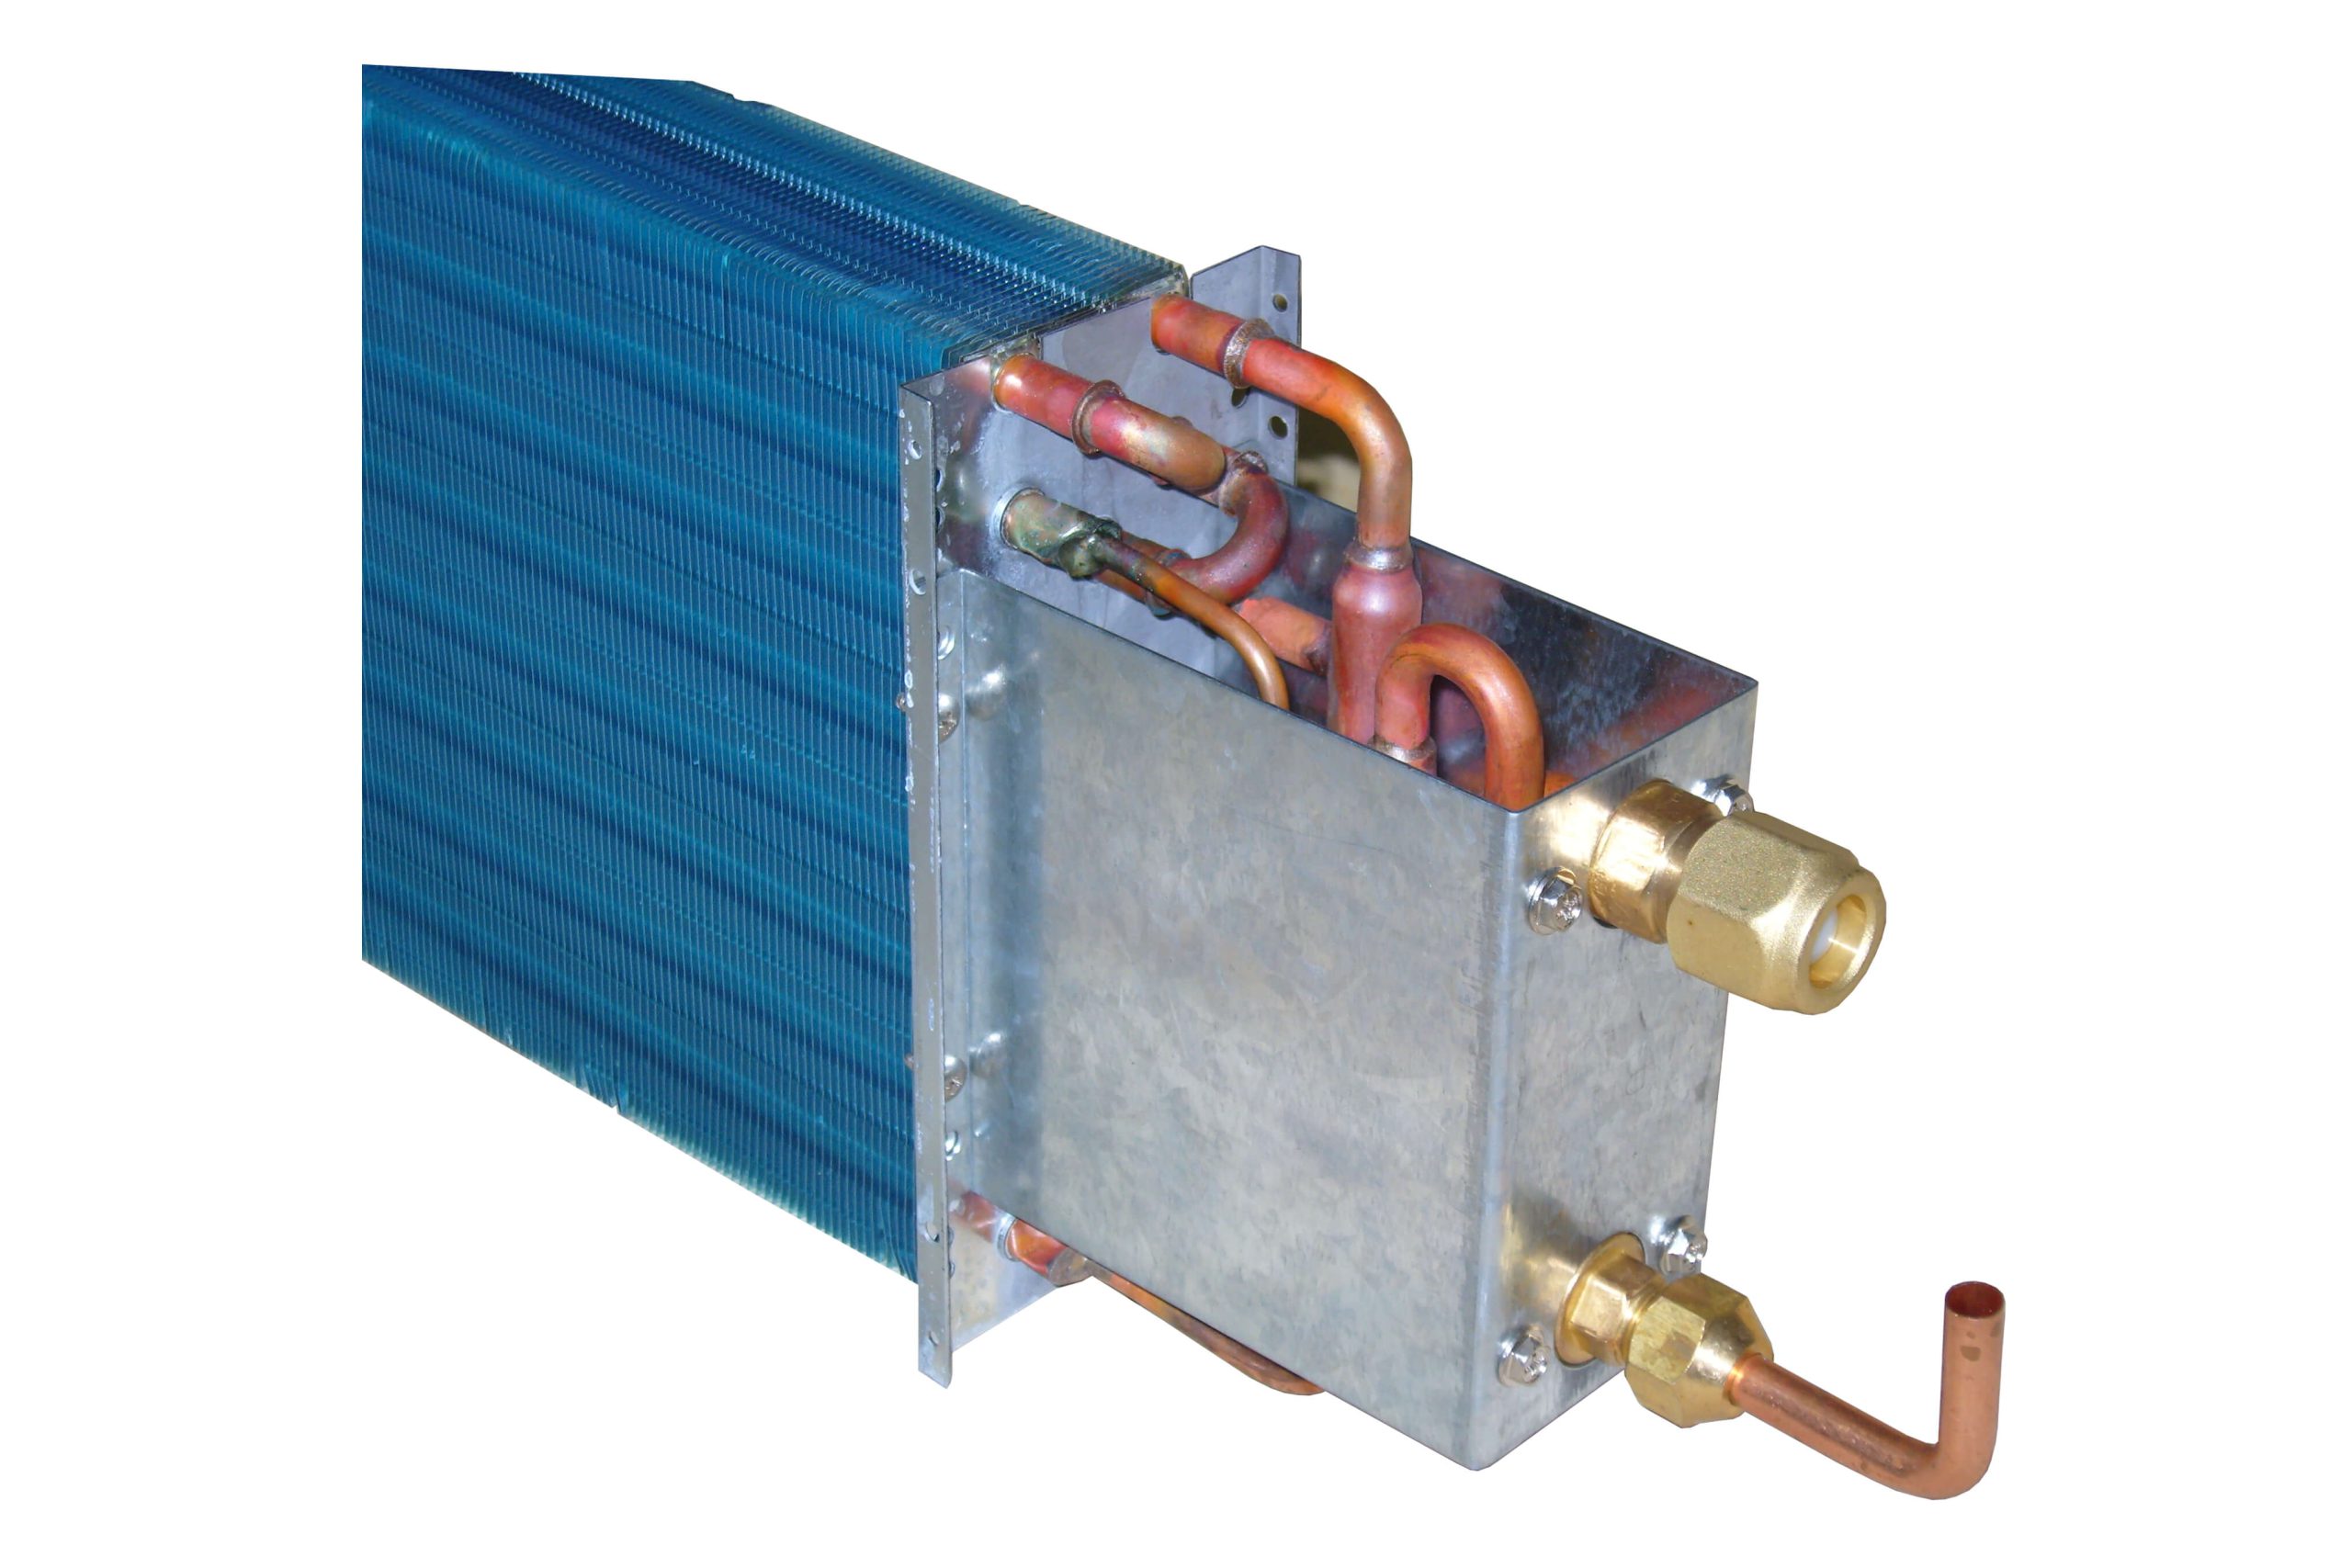 Direct expansion blower evaporation coil